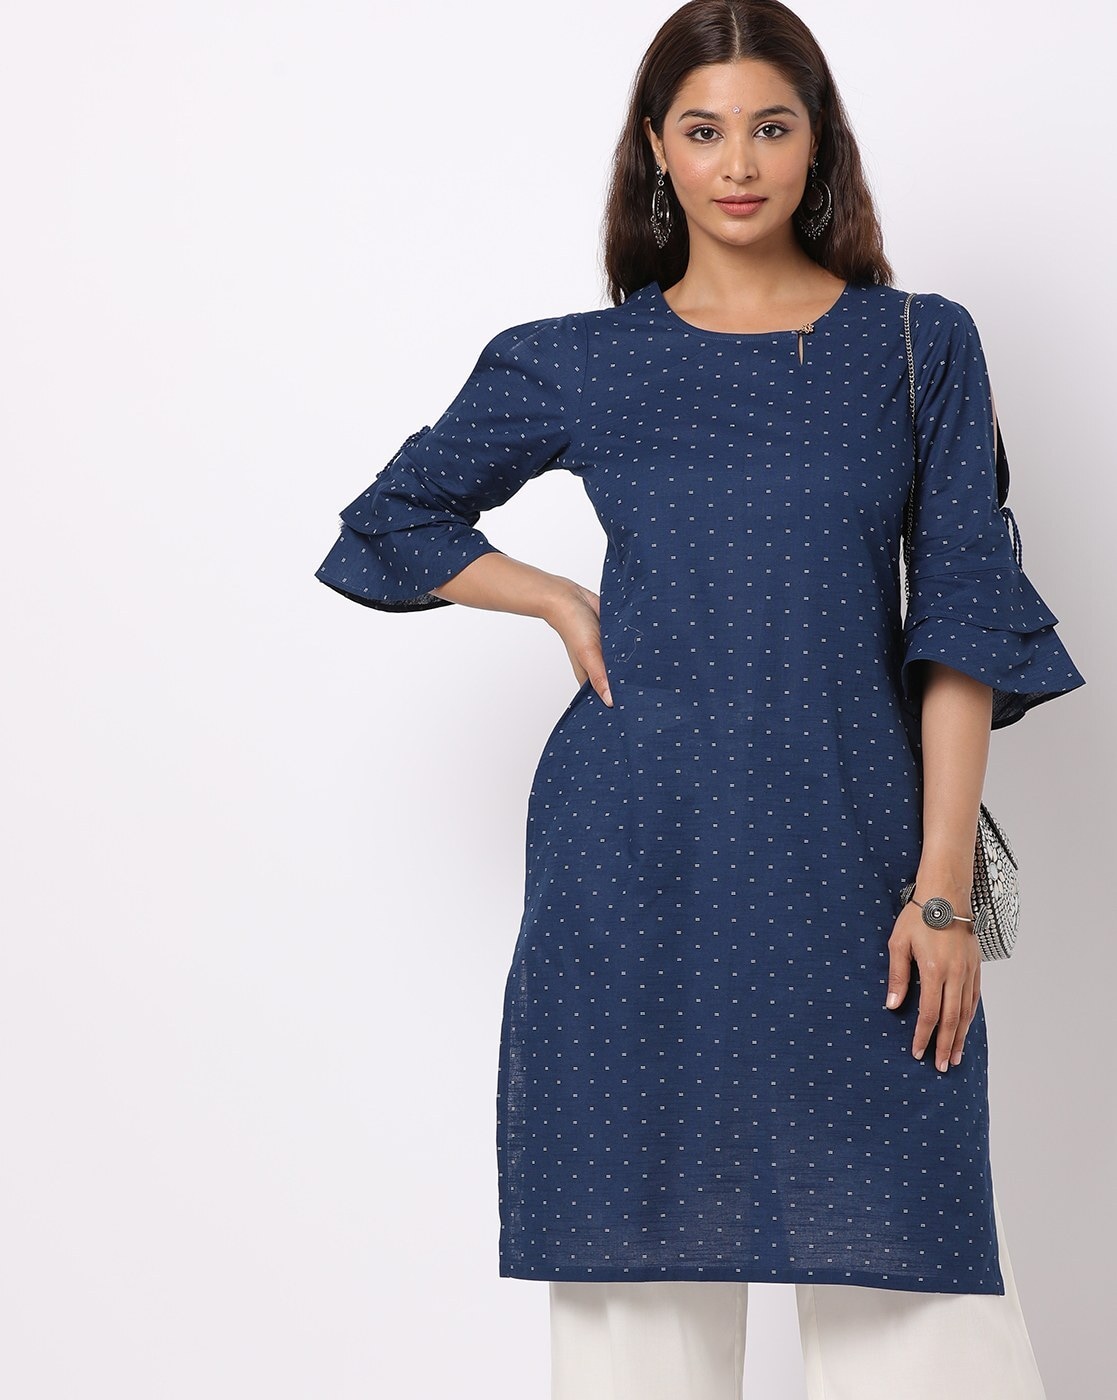 Buy Ethnic Wear for Women Online in India - Westside – Page 2